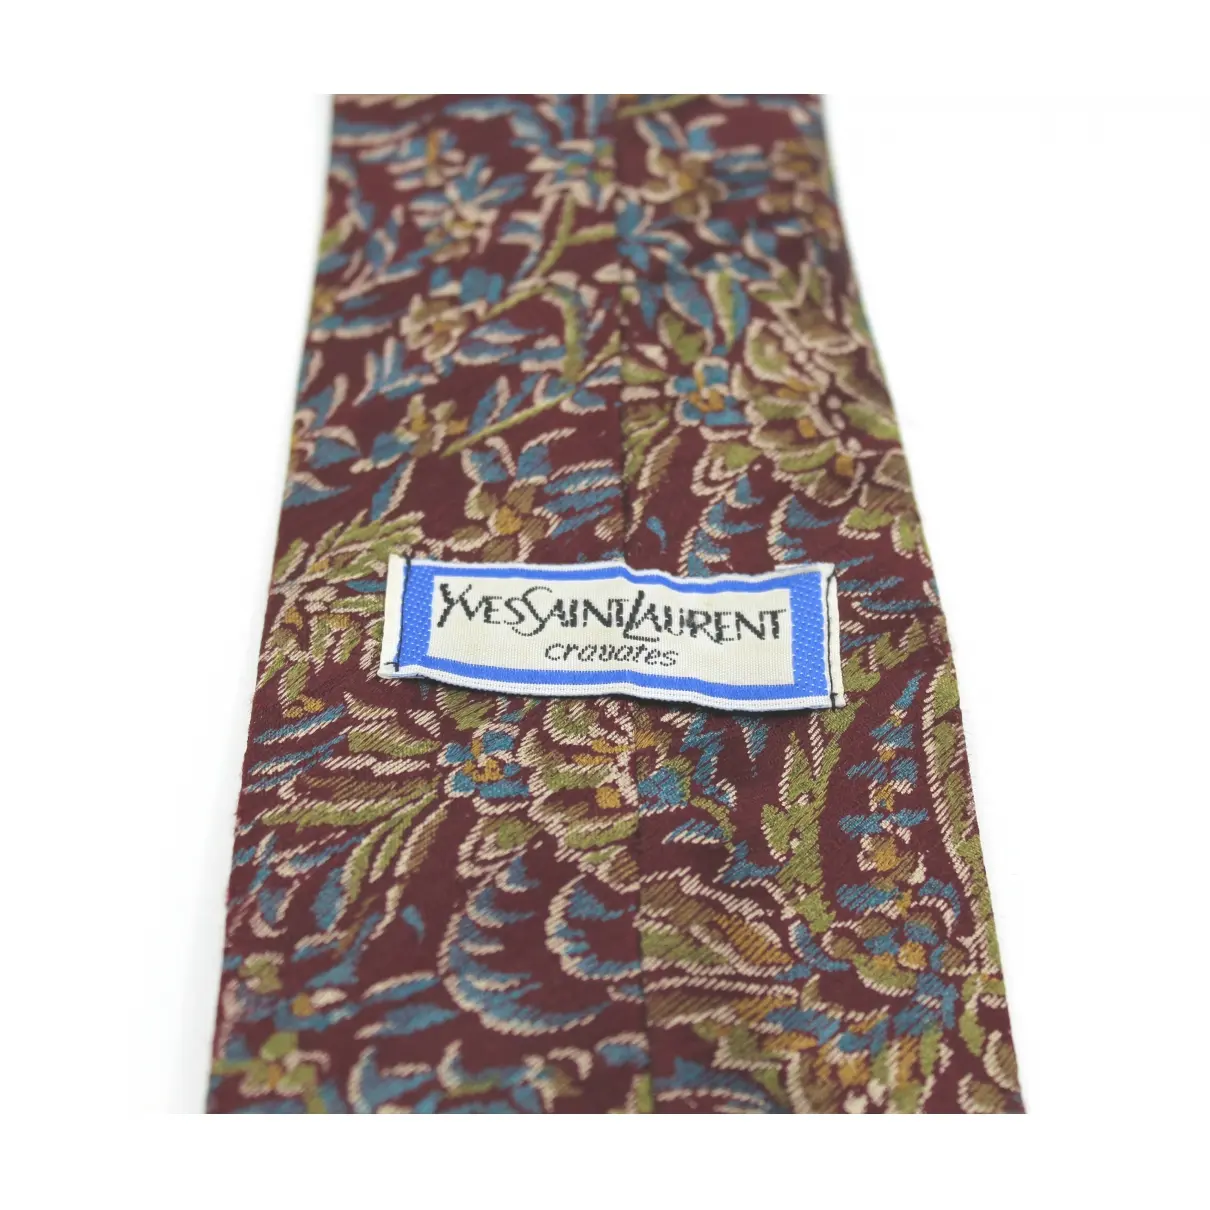 Yves Saint Laurent Silk tie for sale - Vintage